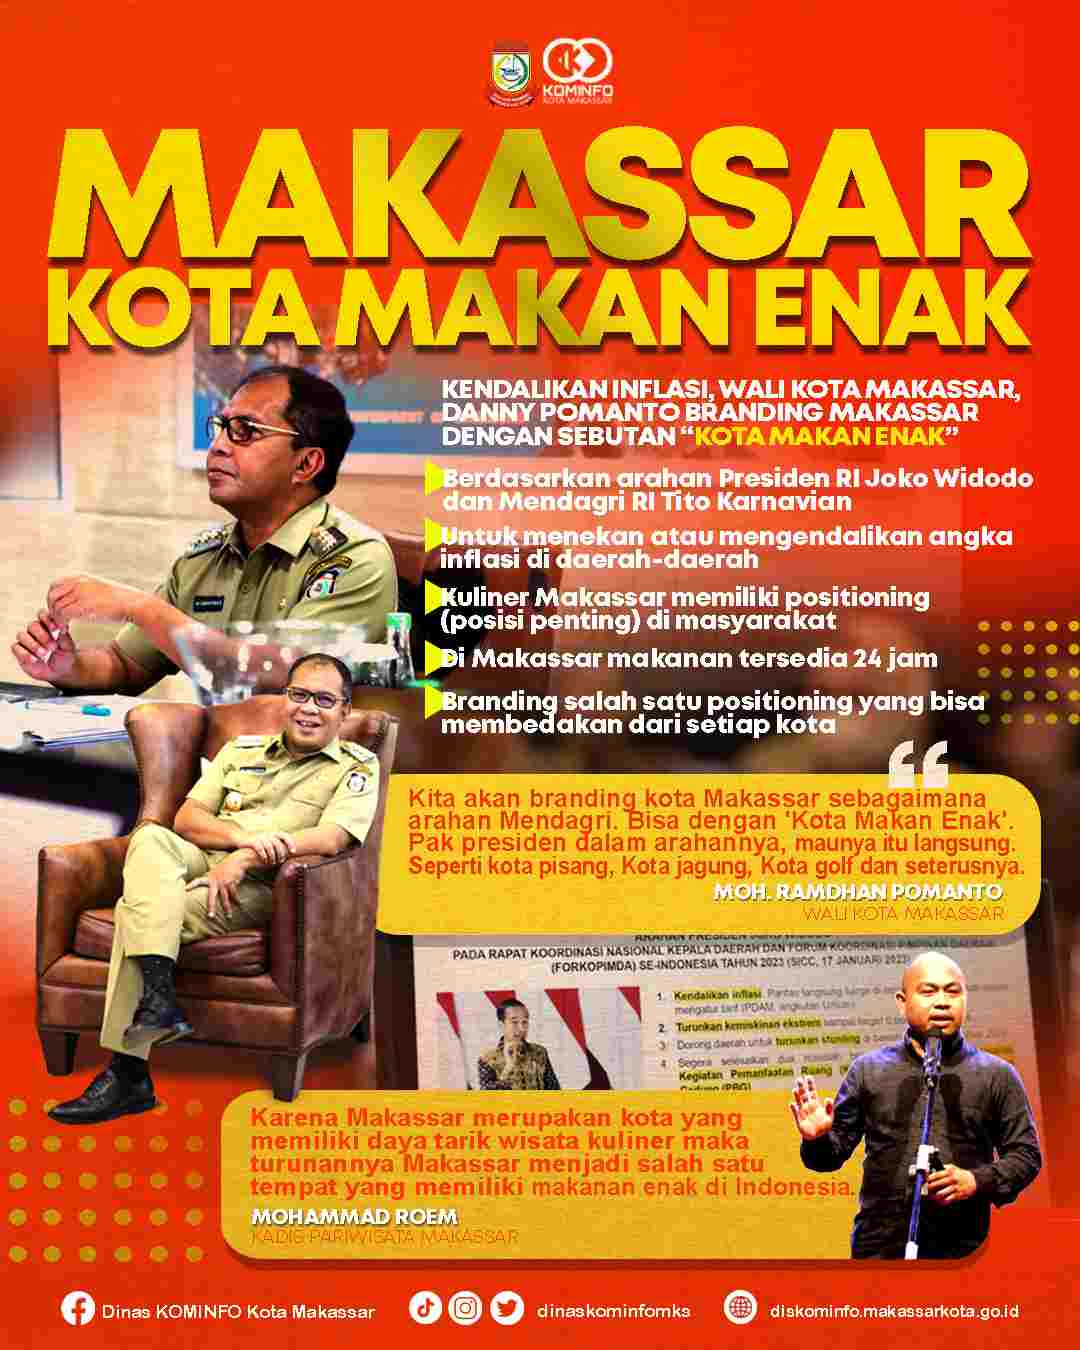 Wali Kota Makassar Danny Pomanto mendeklariskan Makassar sebagai Kota Makan Enak. (Dok/Pemkot Makassar).